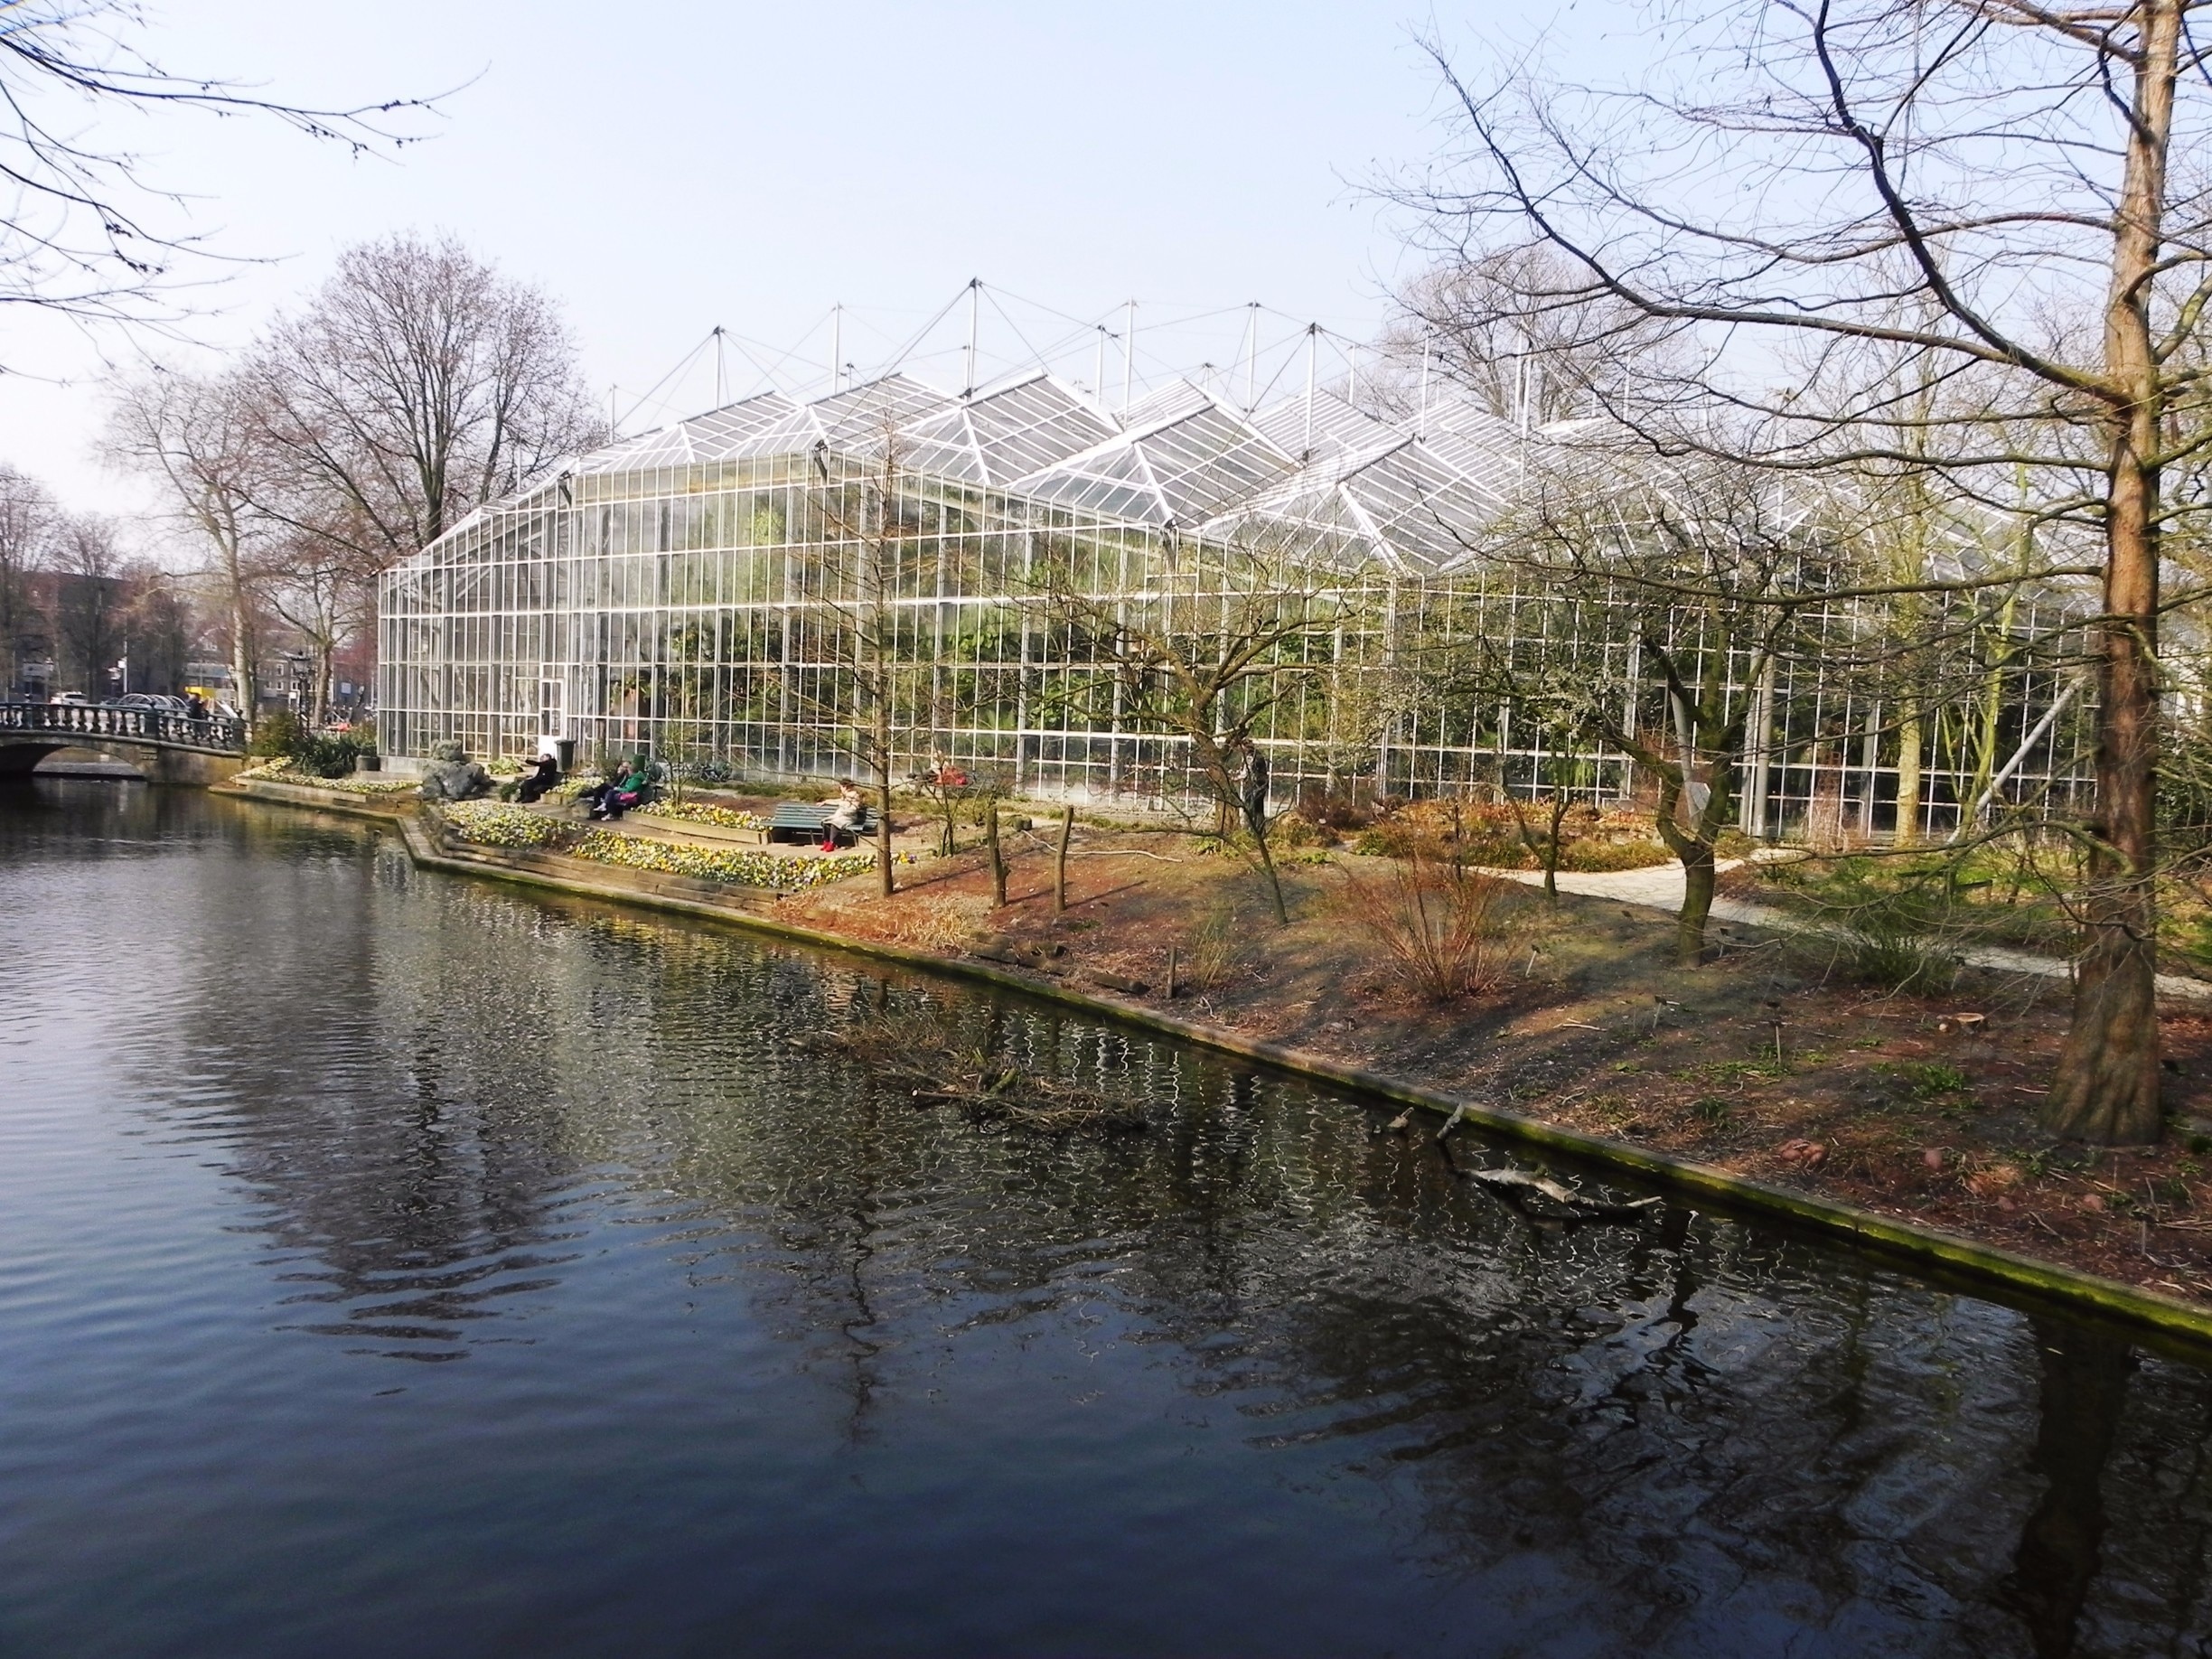 A lovely day spen in Amsterdam's Botanical Gardens: http://cityoftheweek.net/2015/04/10/amsterdam-in-bloom/